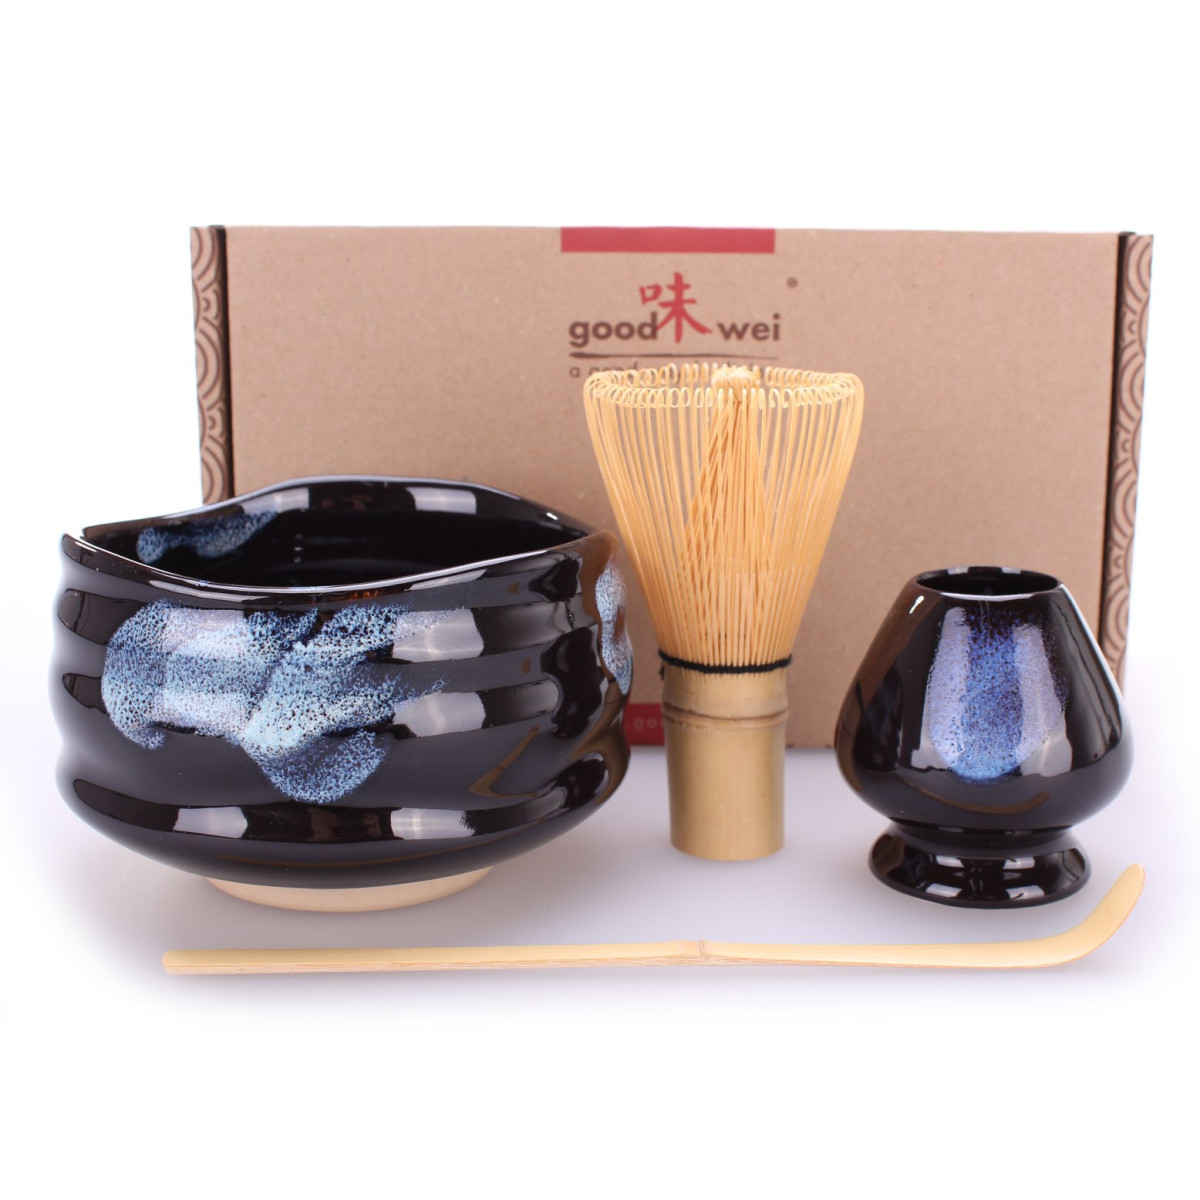 Goodwei Premium Matcha Tea Set Gift Box Ceremonial Bowl Chawan Burashi, 80 Whisk and Holder 